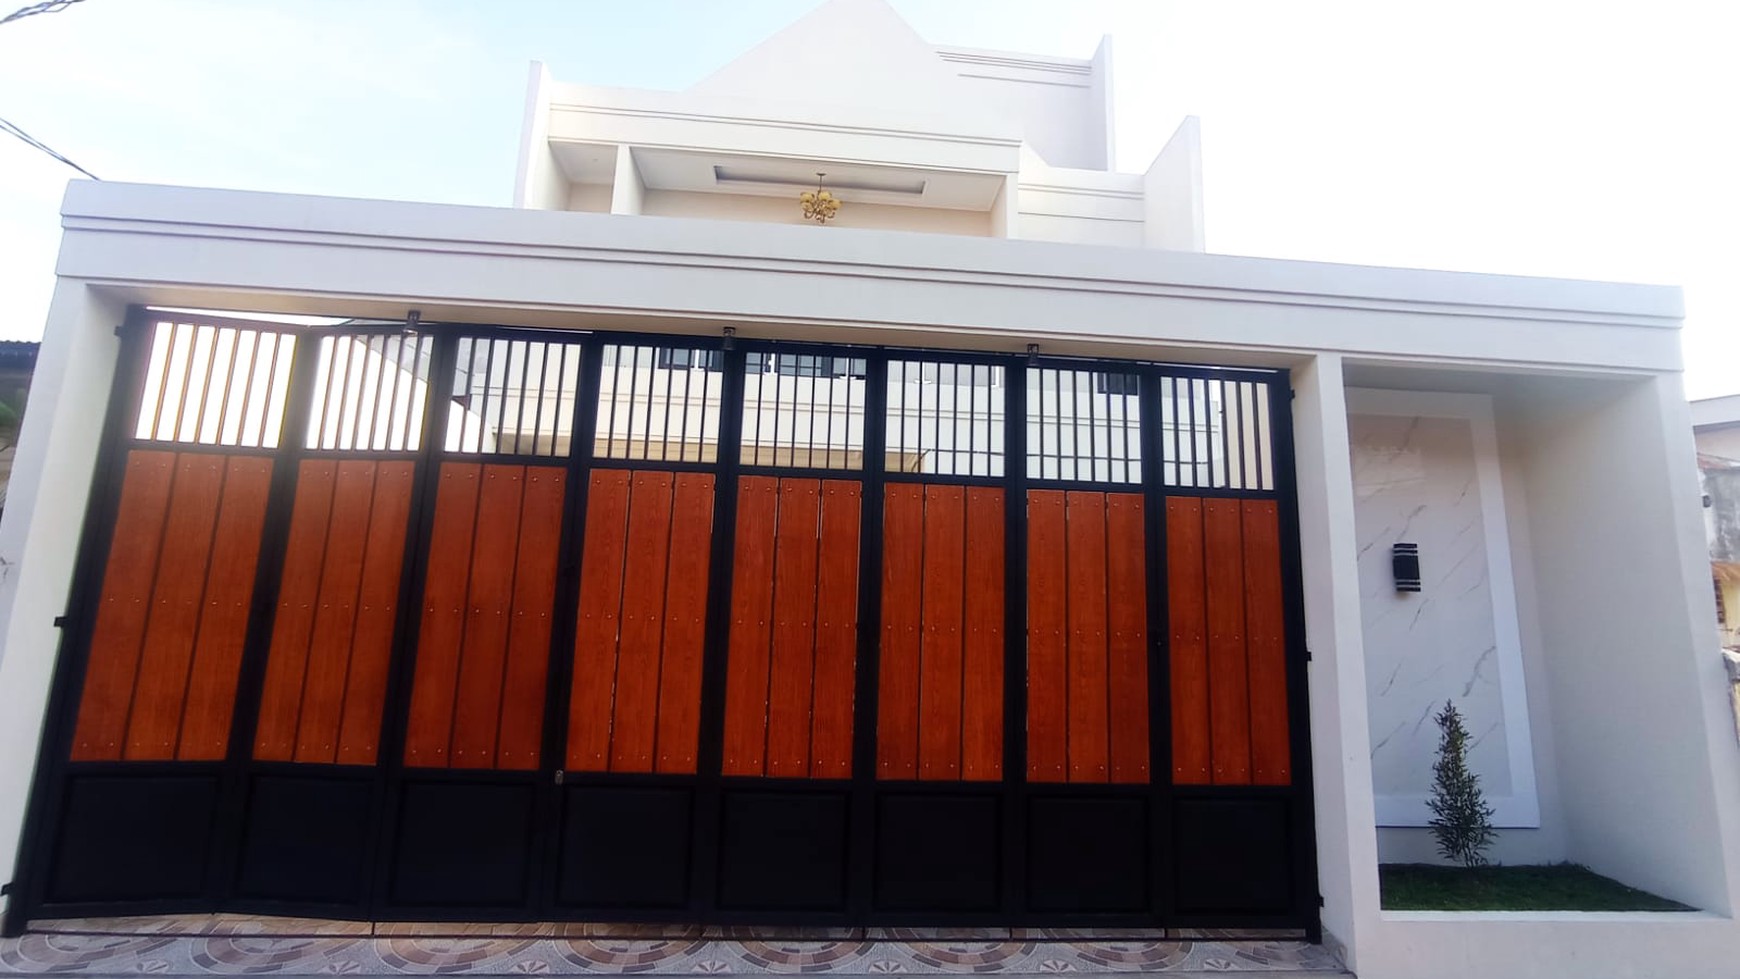 Rumah Brand New, Luxury di Rawamangun